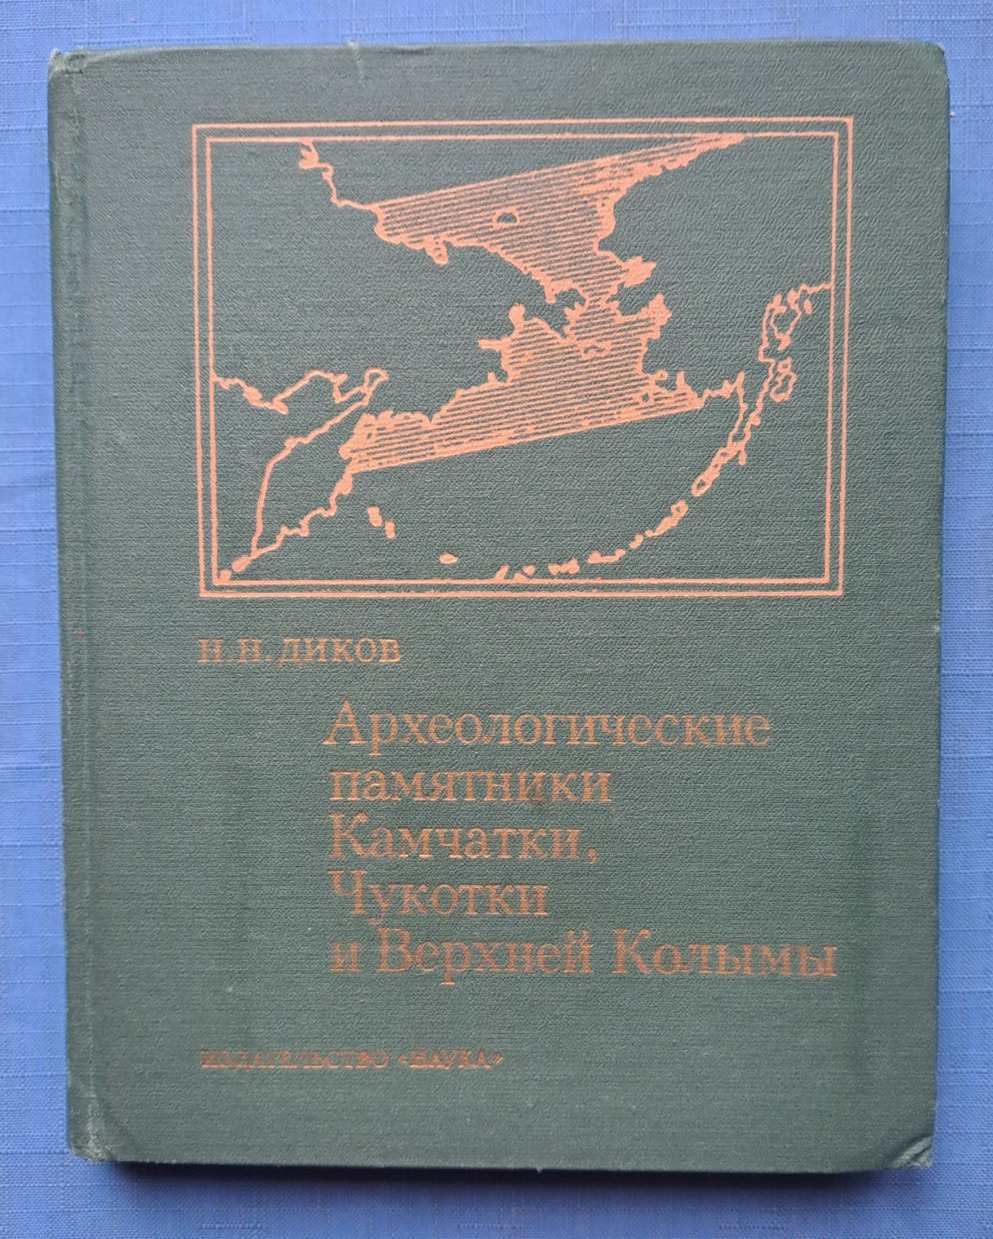 1977 Archeology in Kamchatka Chukotka Kolyma Ancient 4600 only rare Russian book